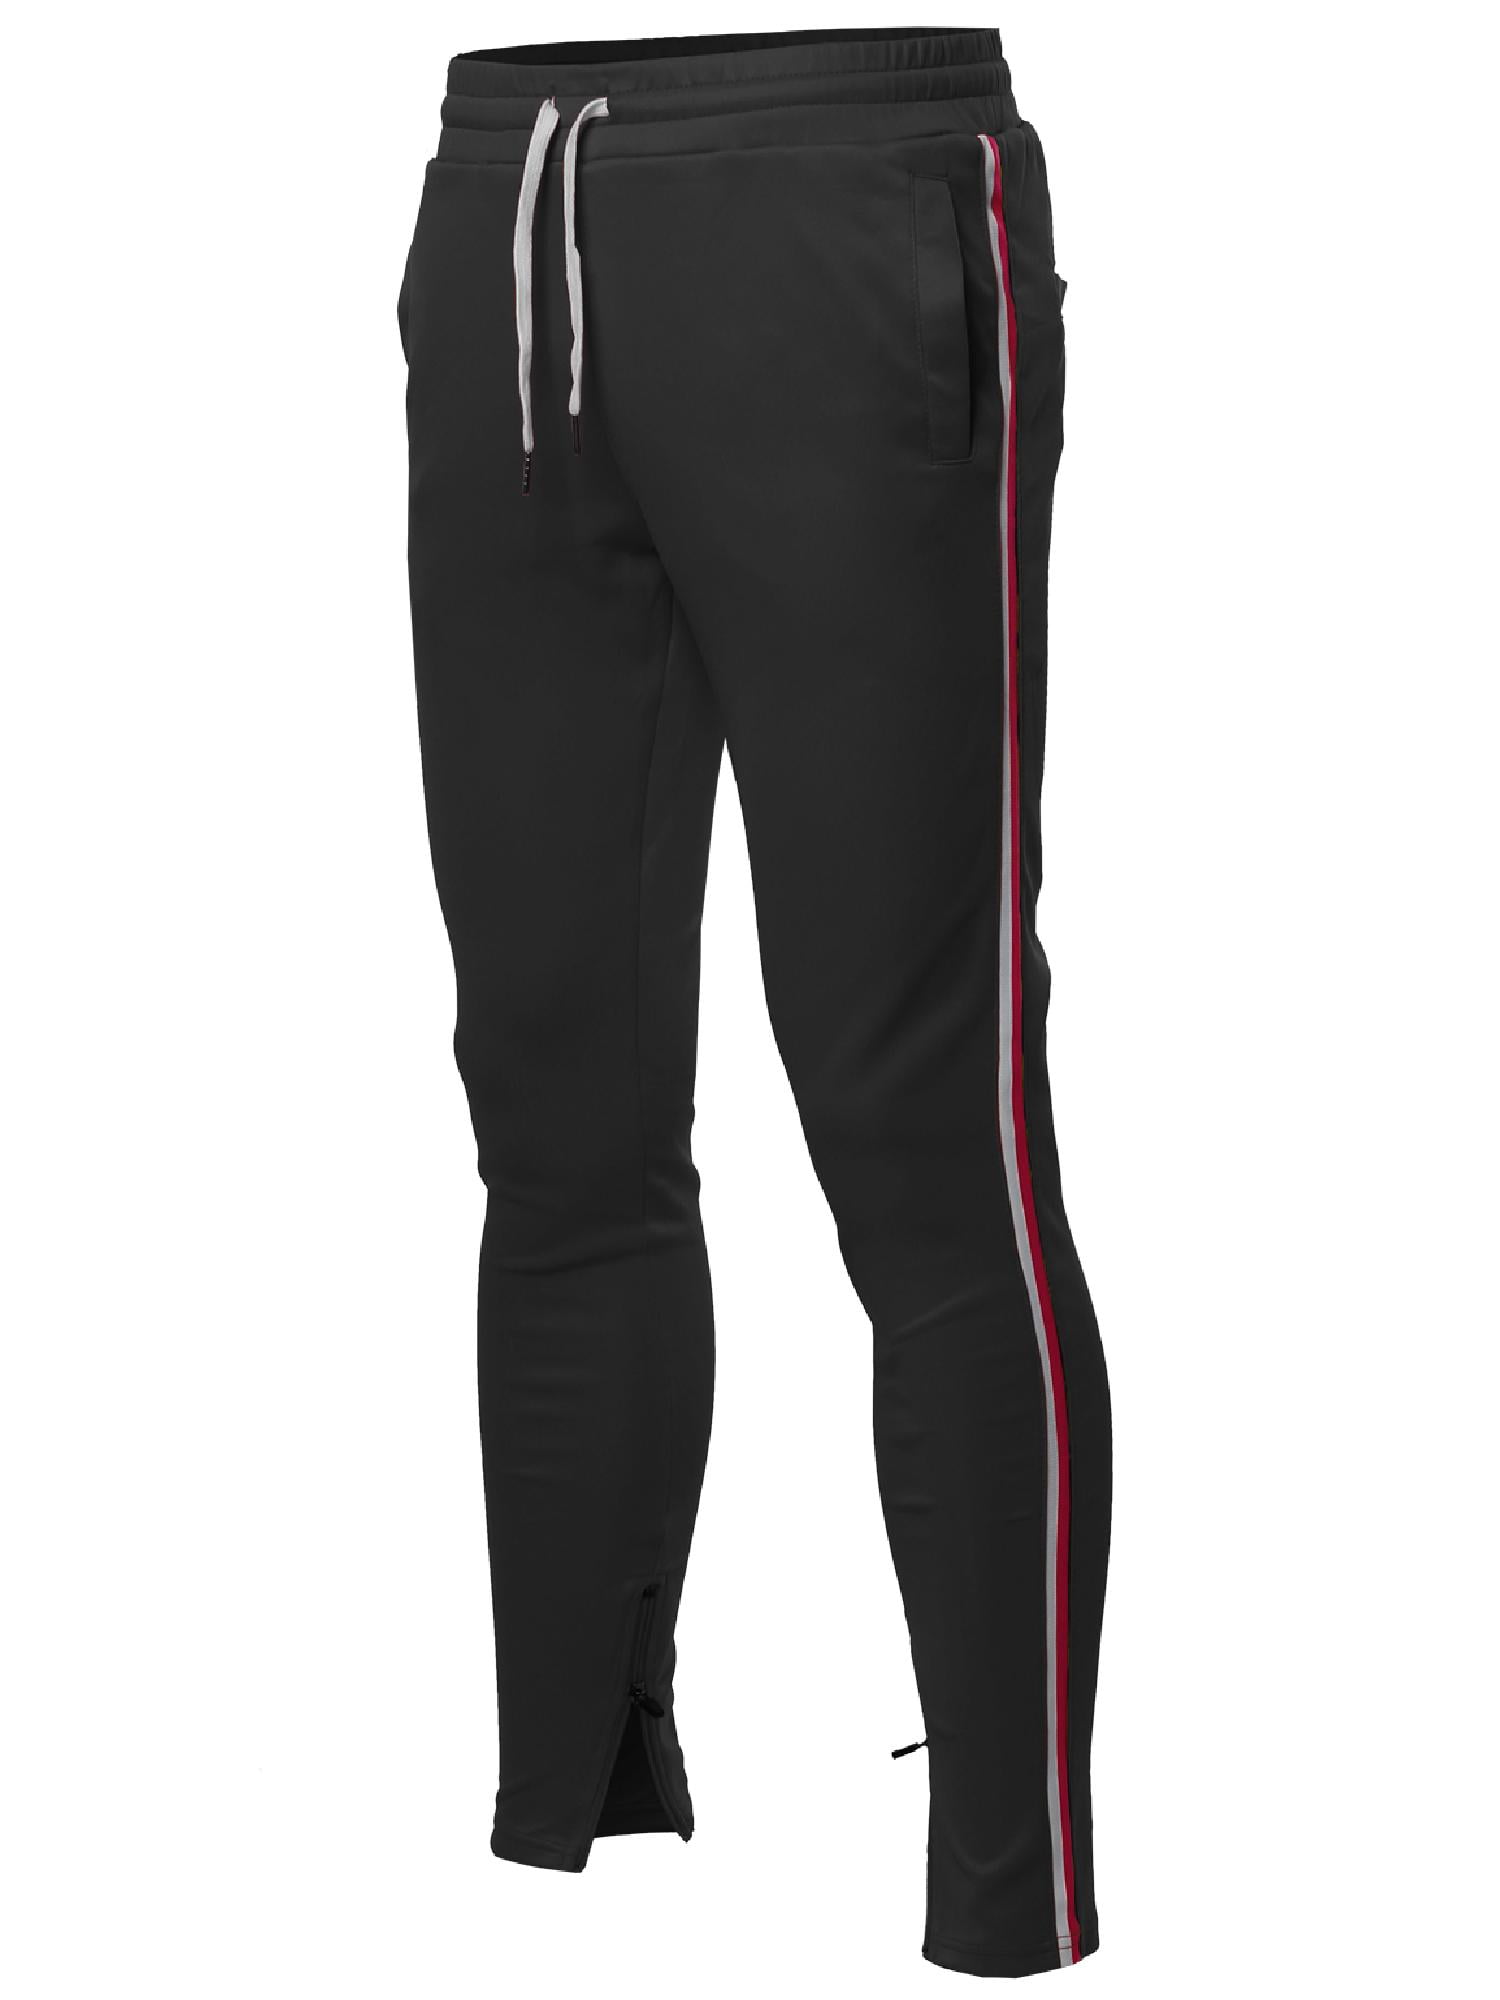 FashionOutfit Men's Side Stripe Ankle Zipper Track Pants - Walmart.com